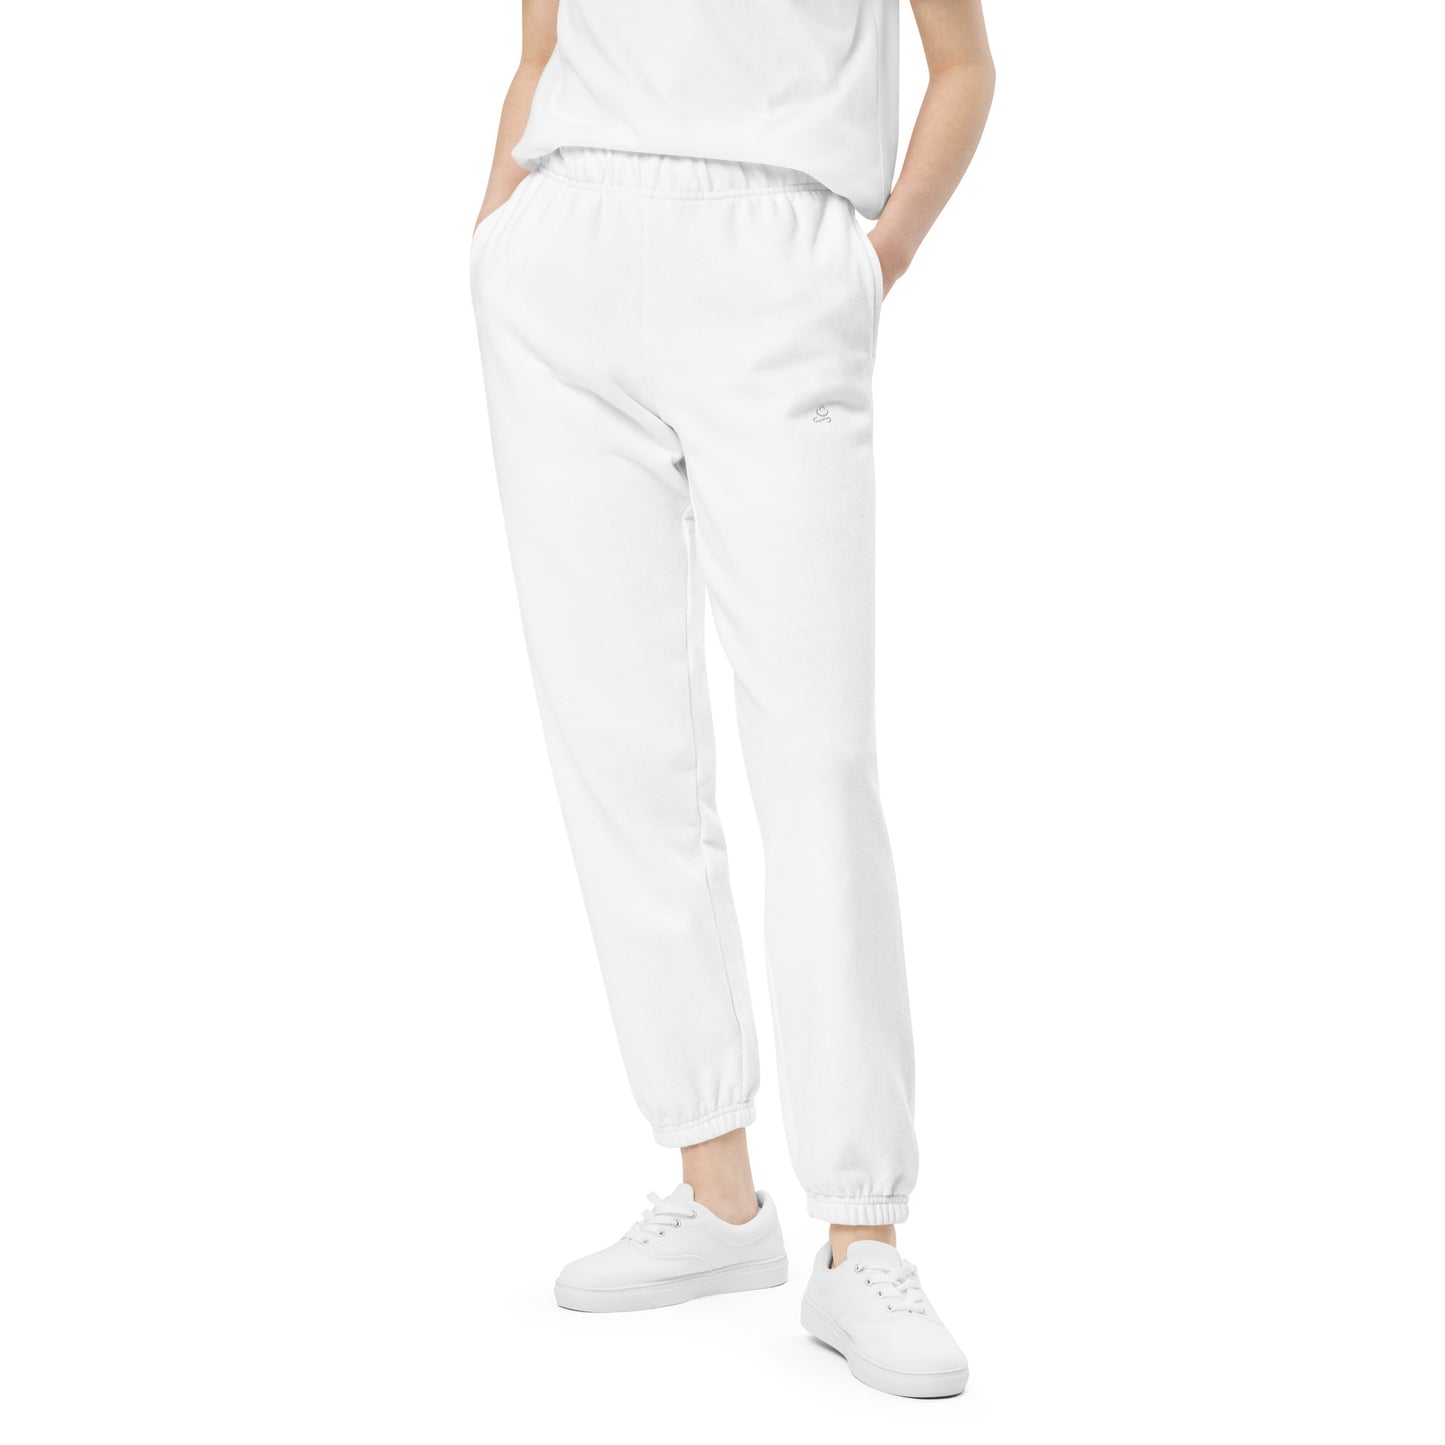 100% Cotton Comfort Sweatpants Jain Yoga